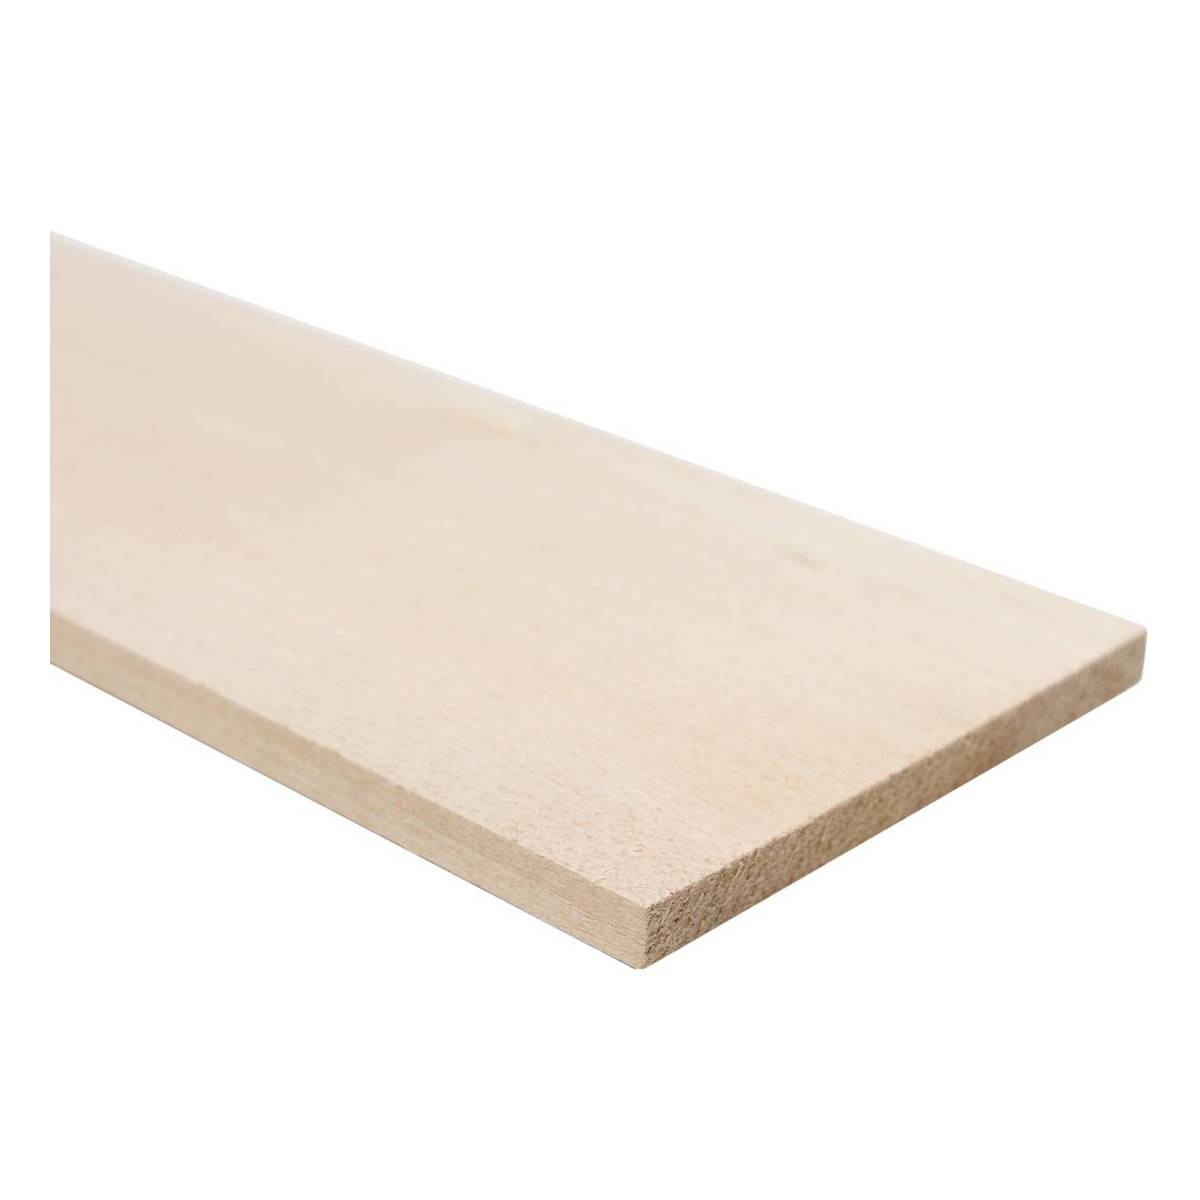 1/4" x 1/4" x 23" Model Lumber craft basswood strip 2pcs 